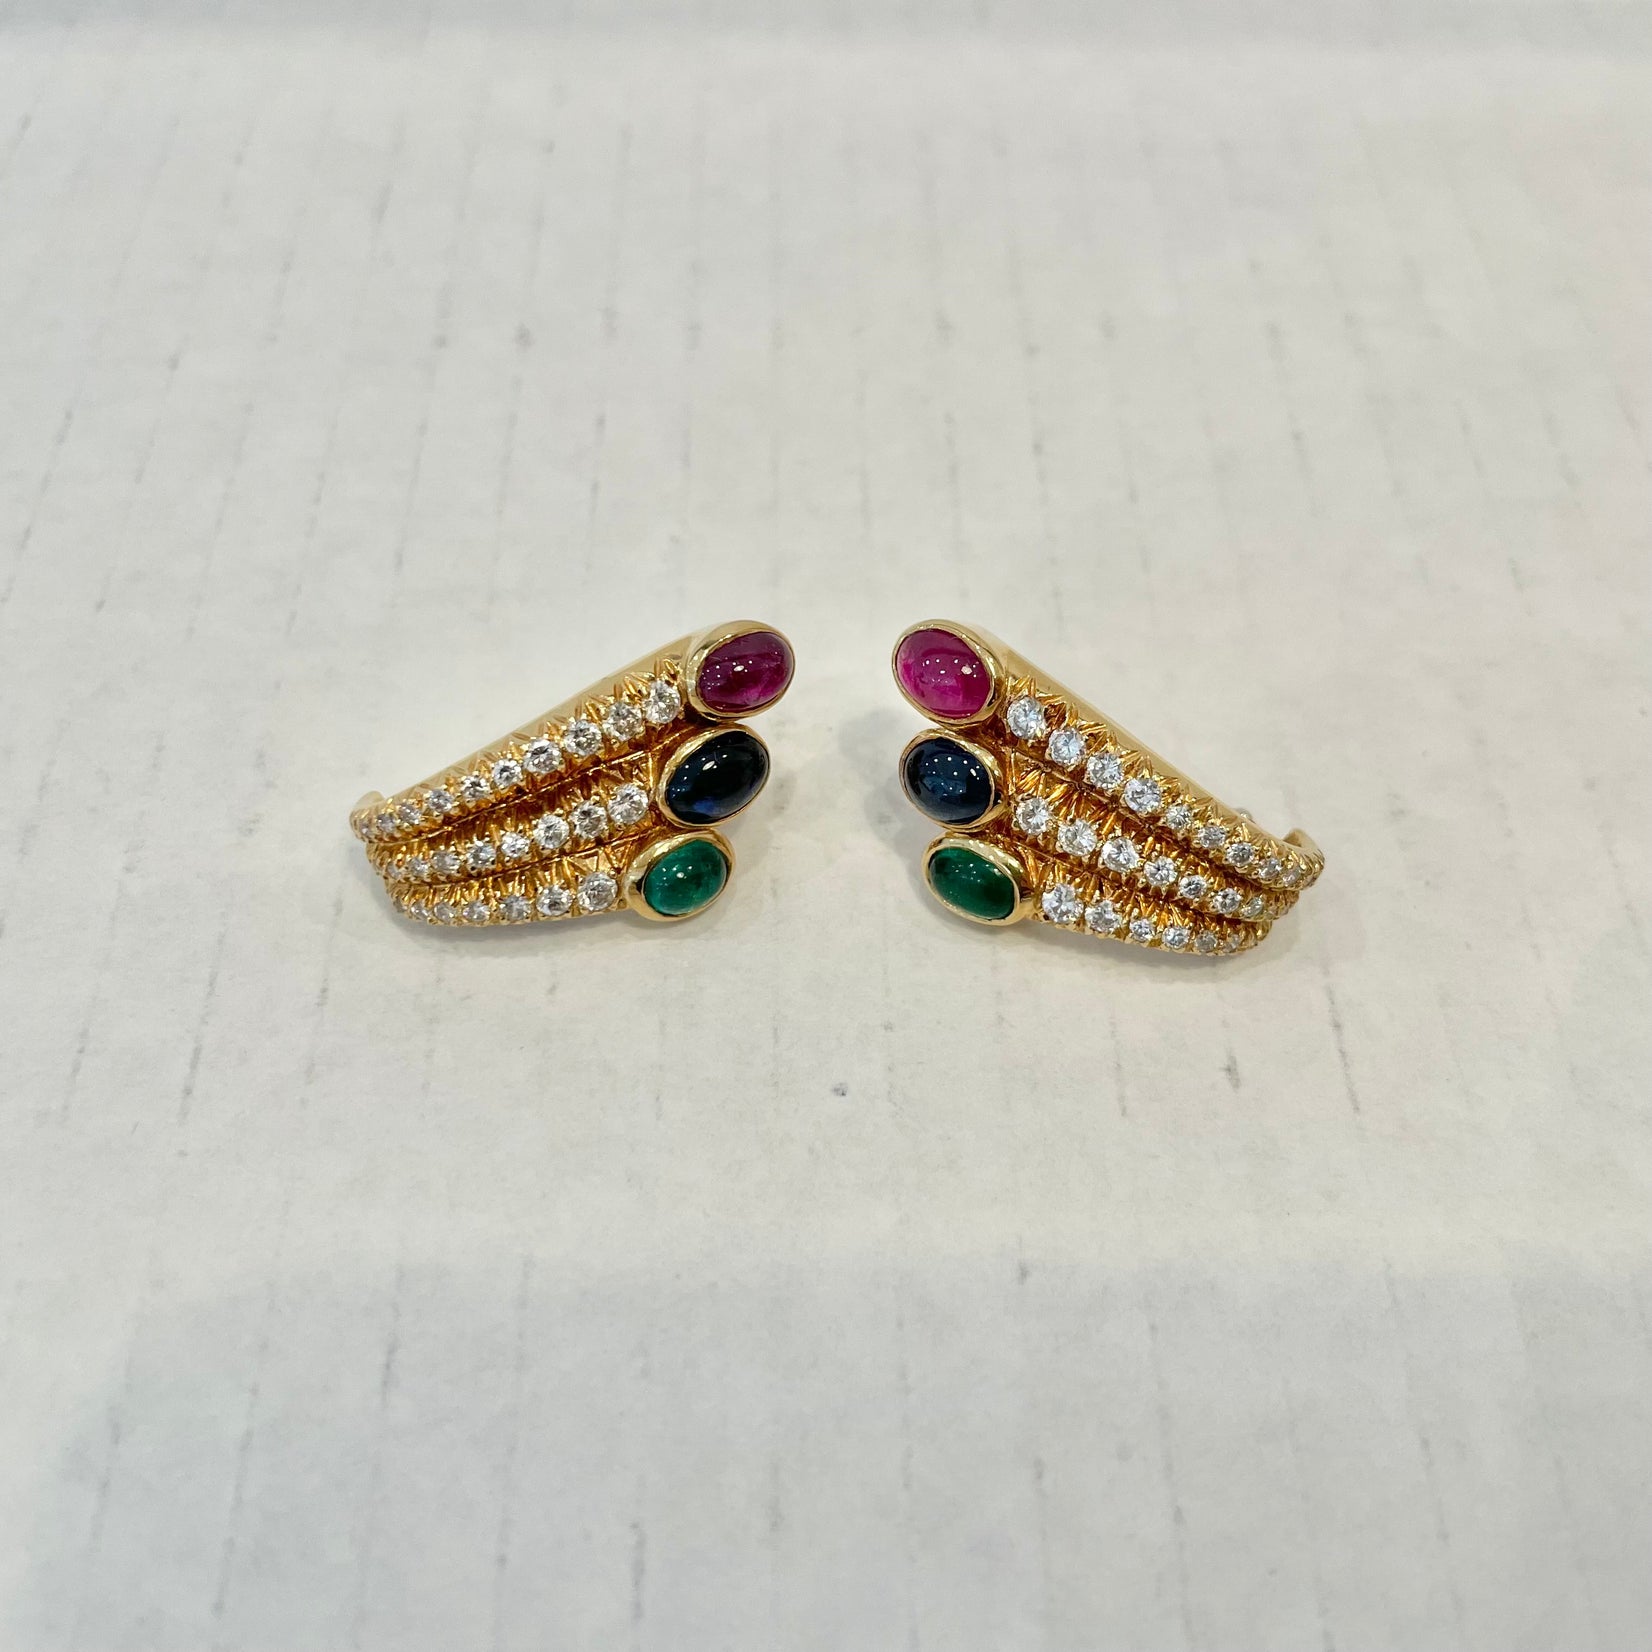 Ruby, Sapphire, Emerald & Diamond Earrings in 18 Karat Yellow Gold